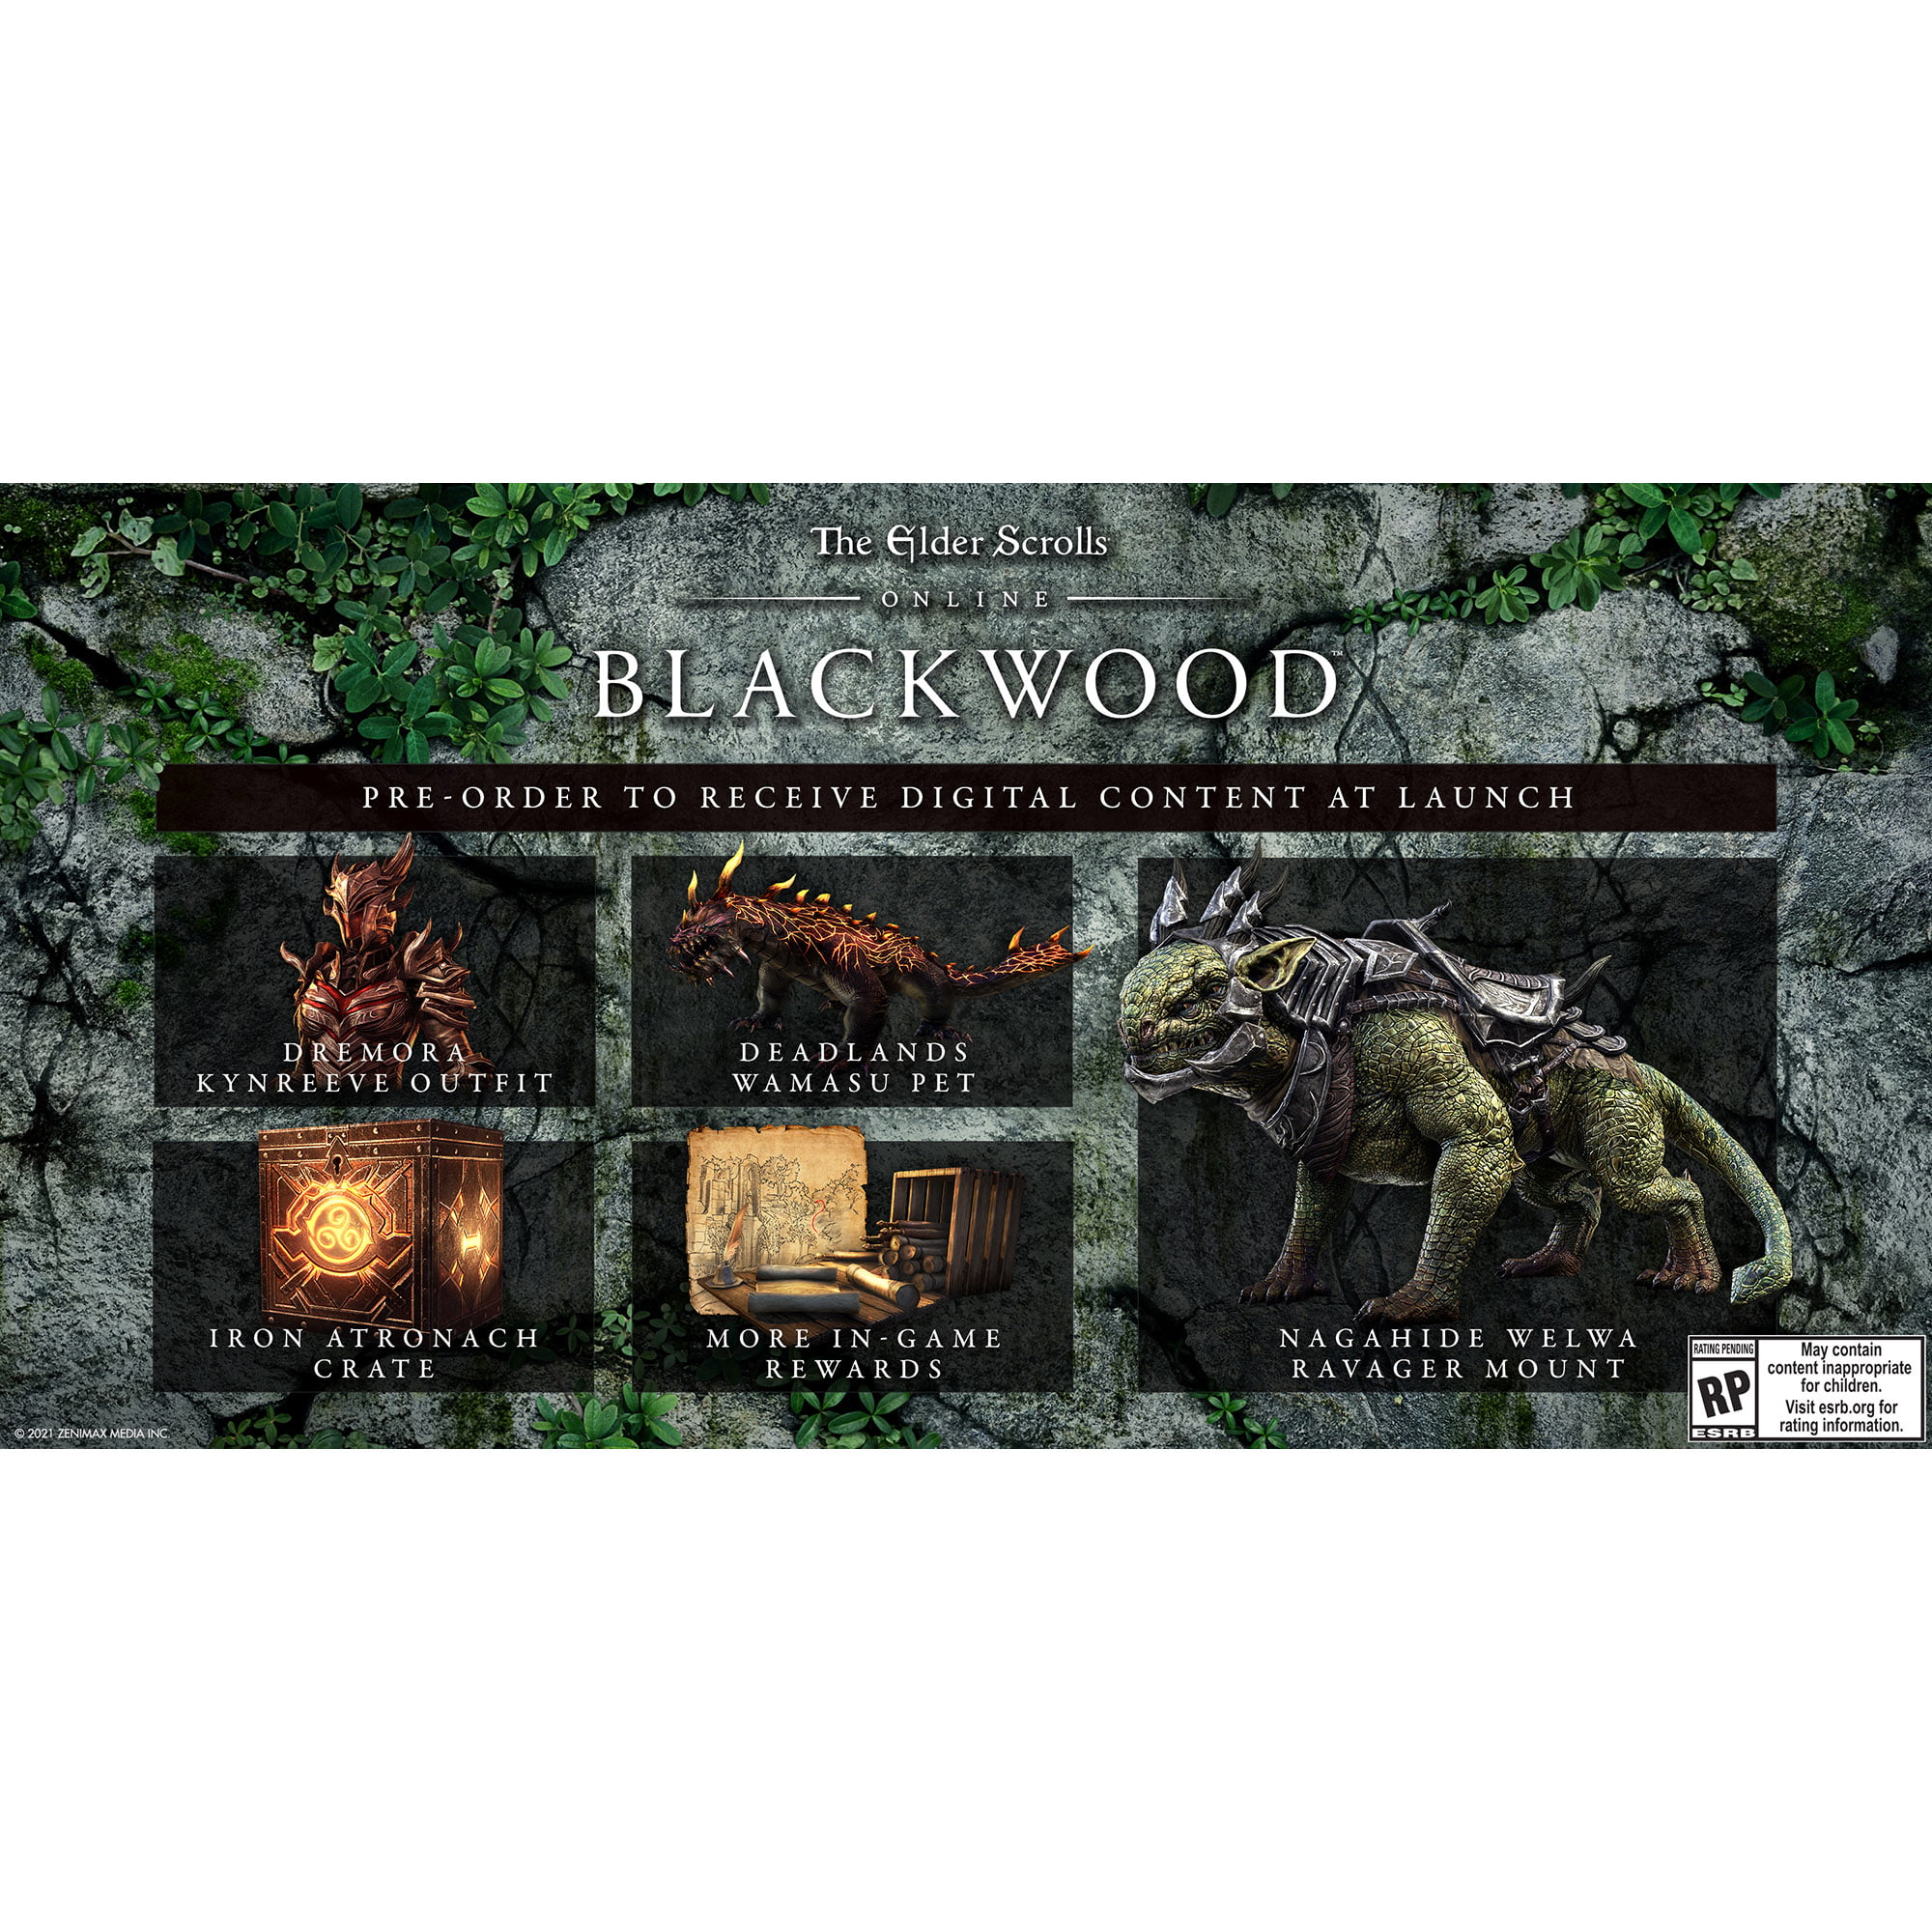 The Elder Scrolls Online: Blackwood Review